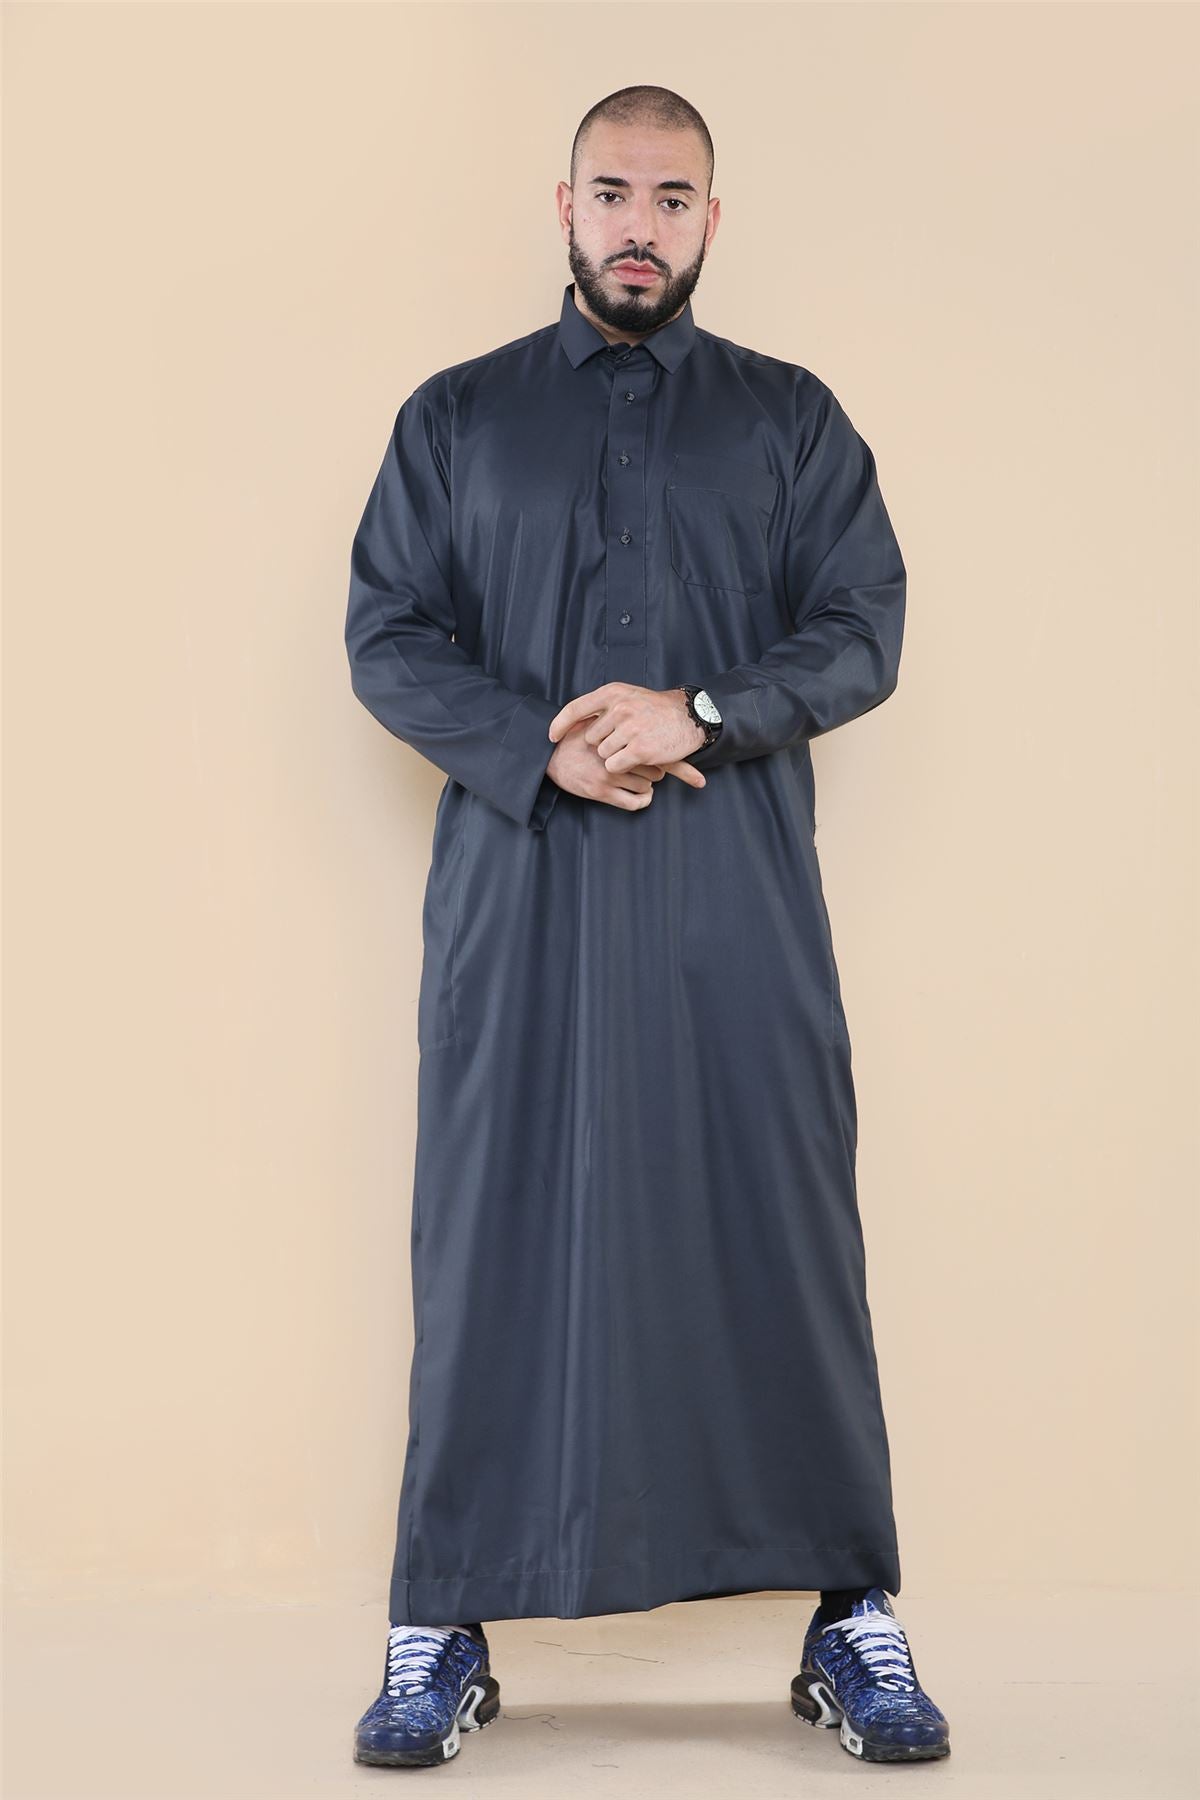 Dishdasha pour homme robe islamique musulmane arabe avec col remontable style kaftan thobe en coton